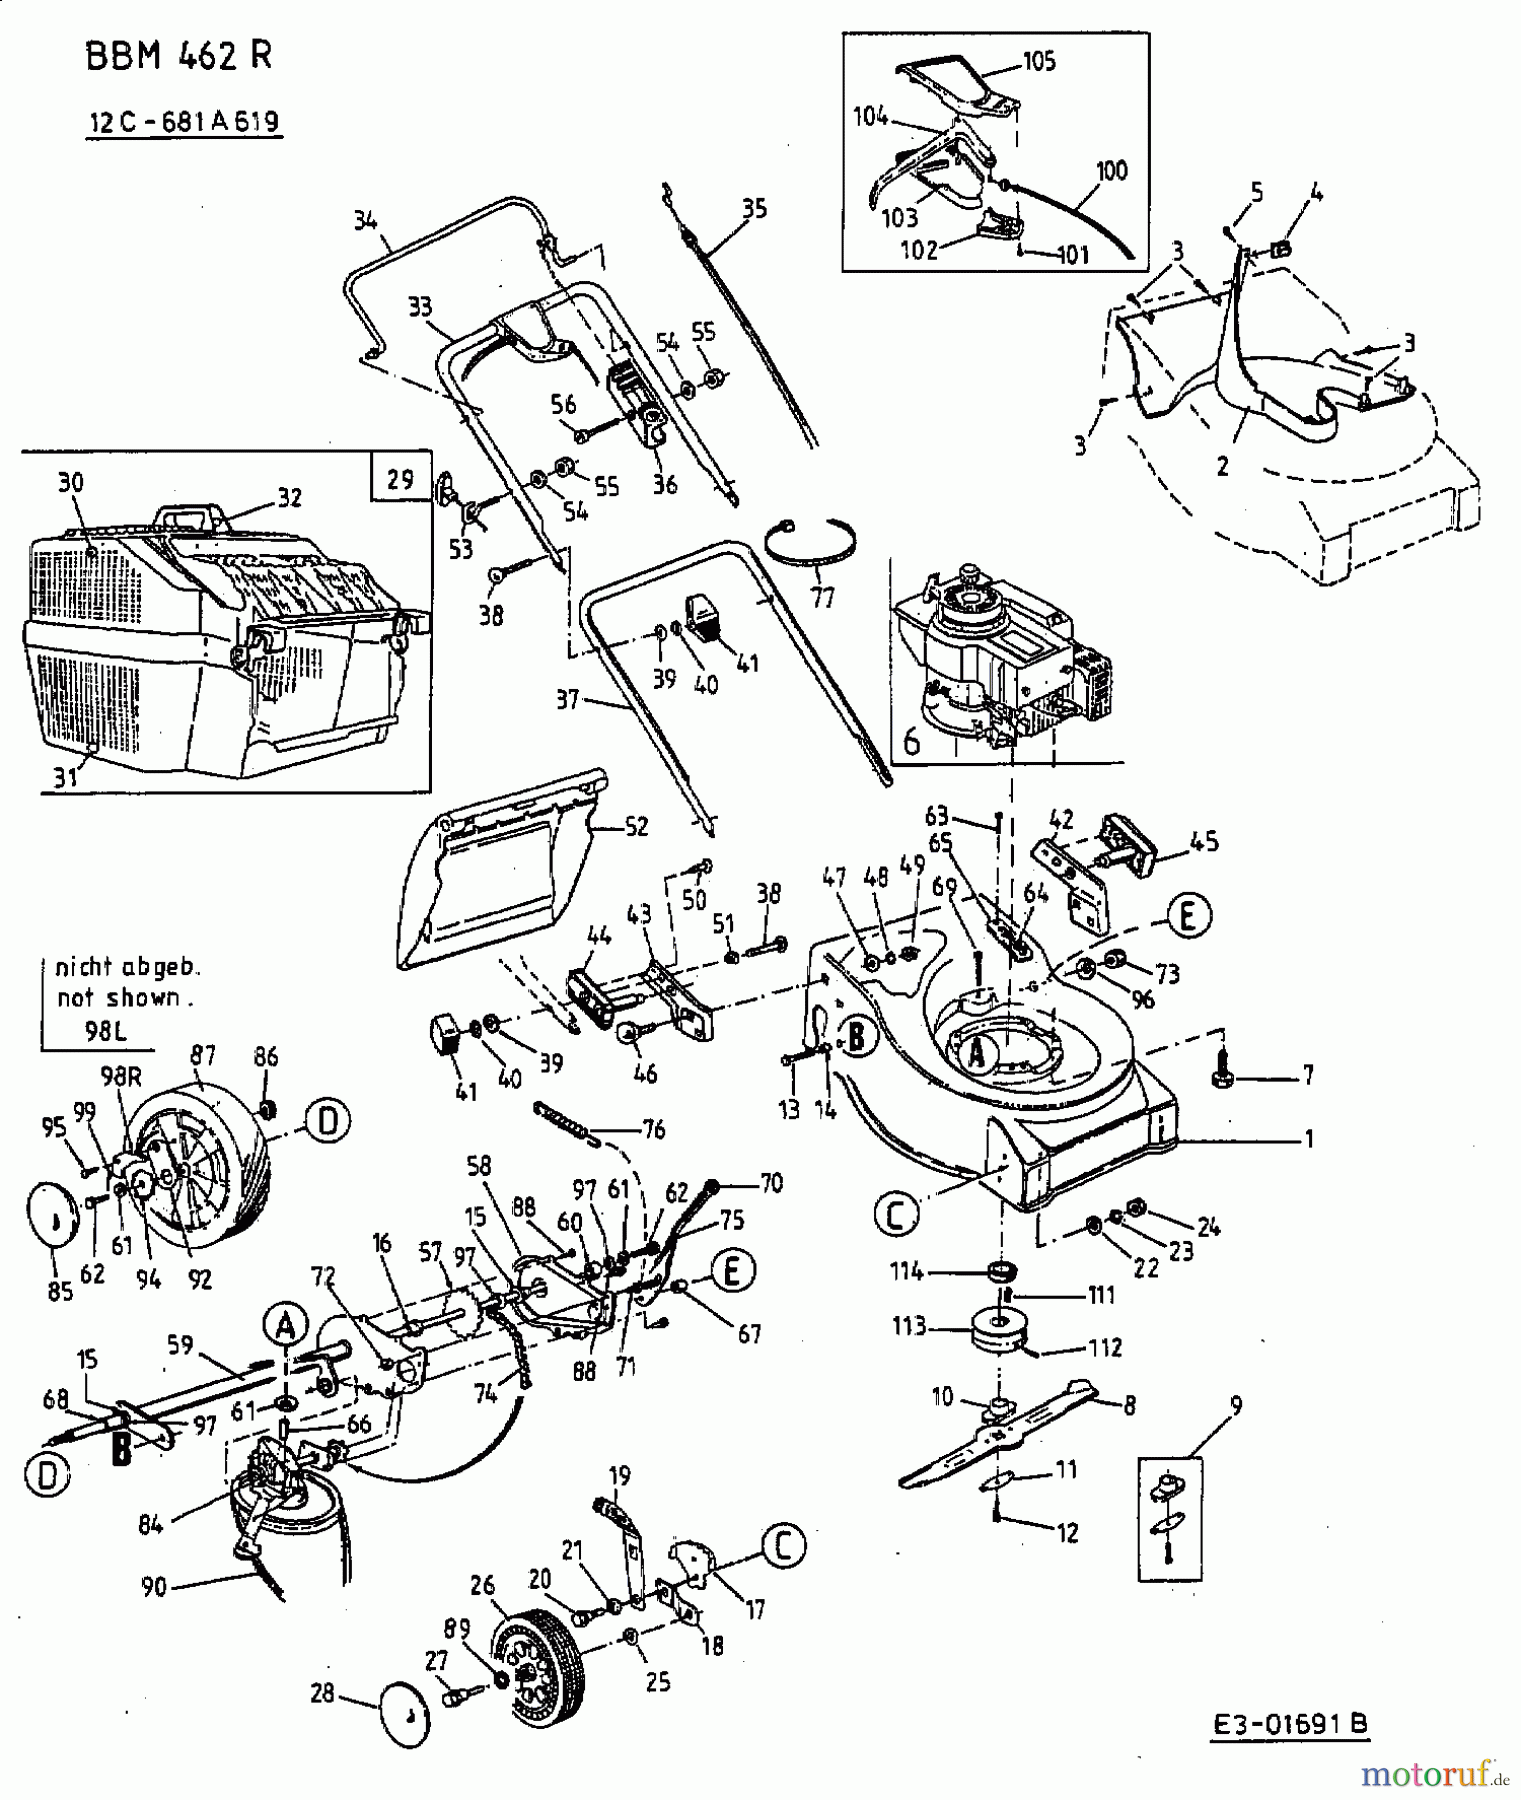  Budget Motormäher mit Antrieb BBM 462 R 12C-681A619  (2003) Grundgerät